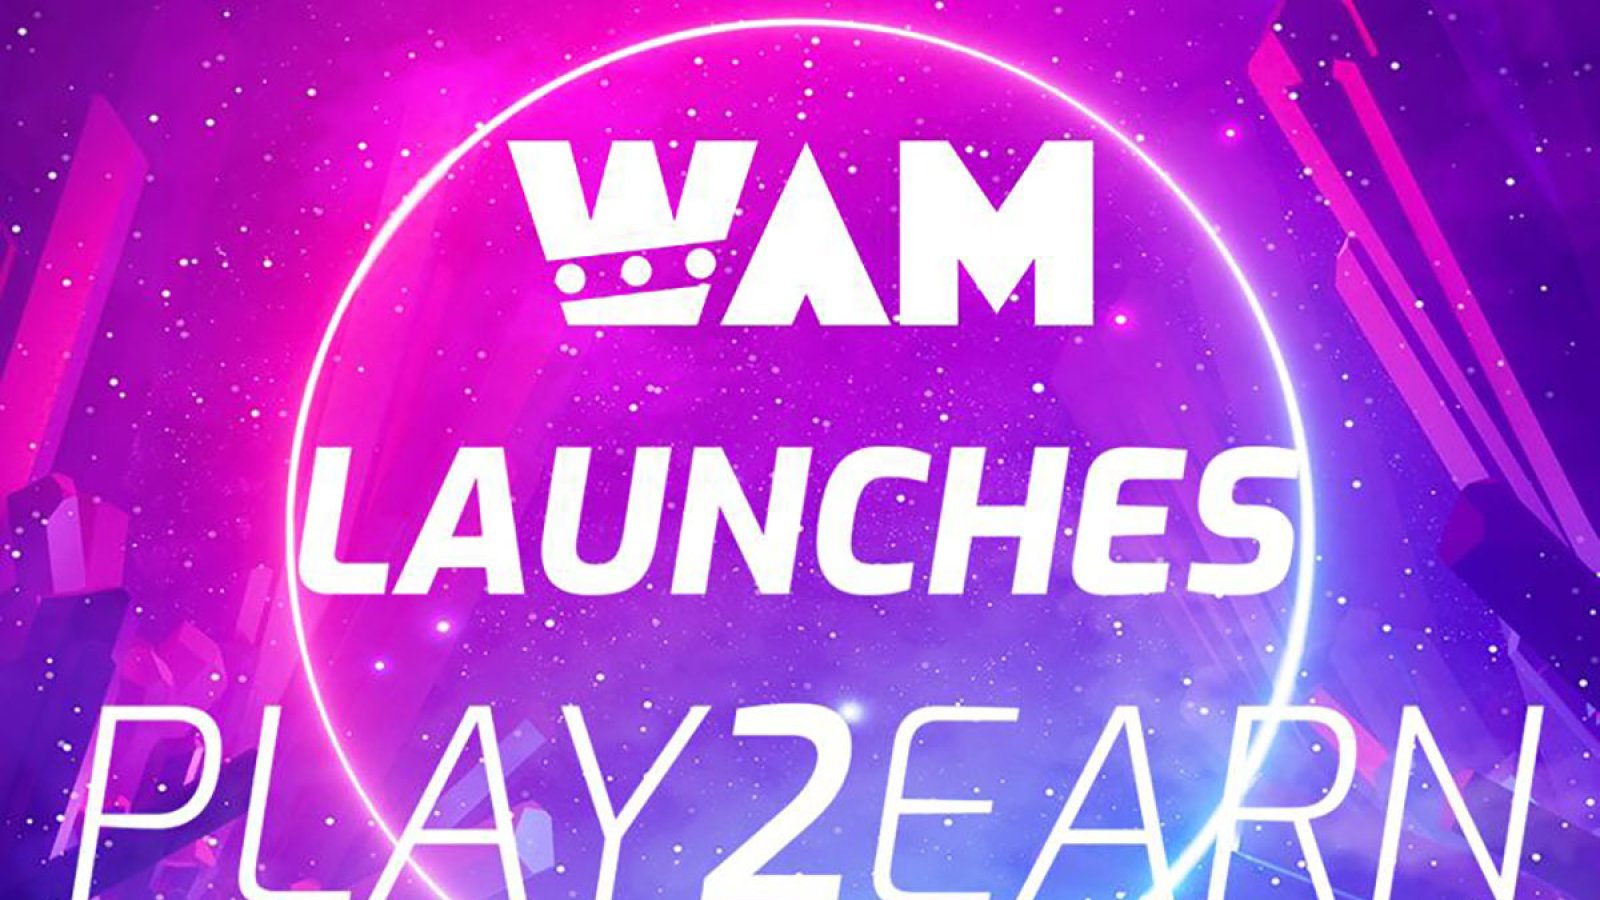 Wam Launches Play2earn